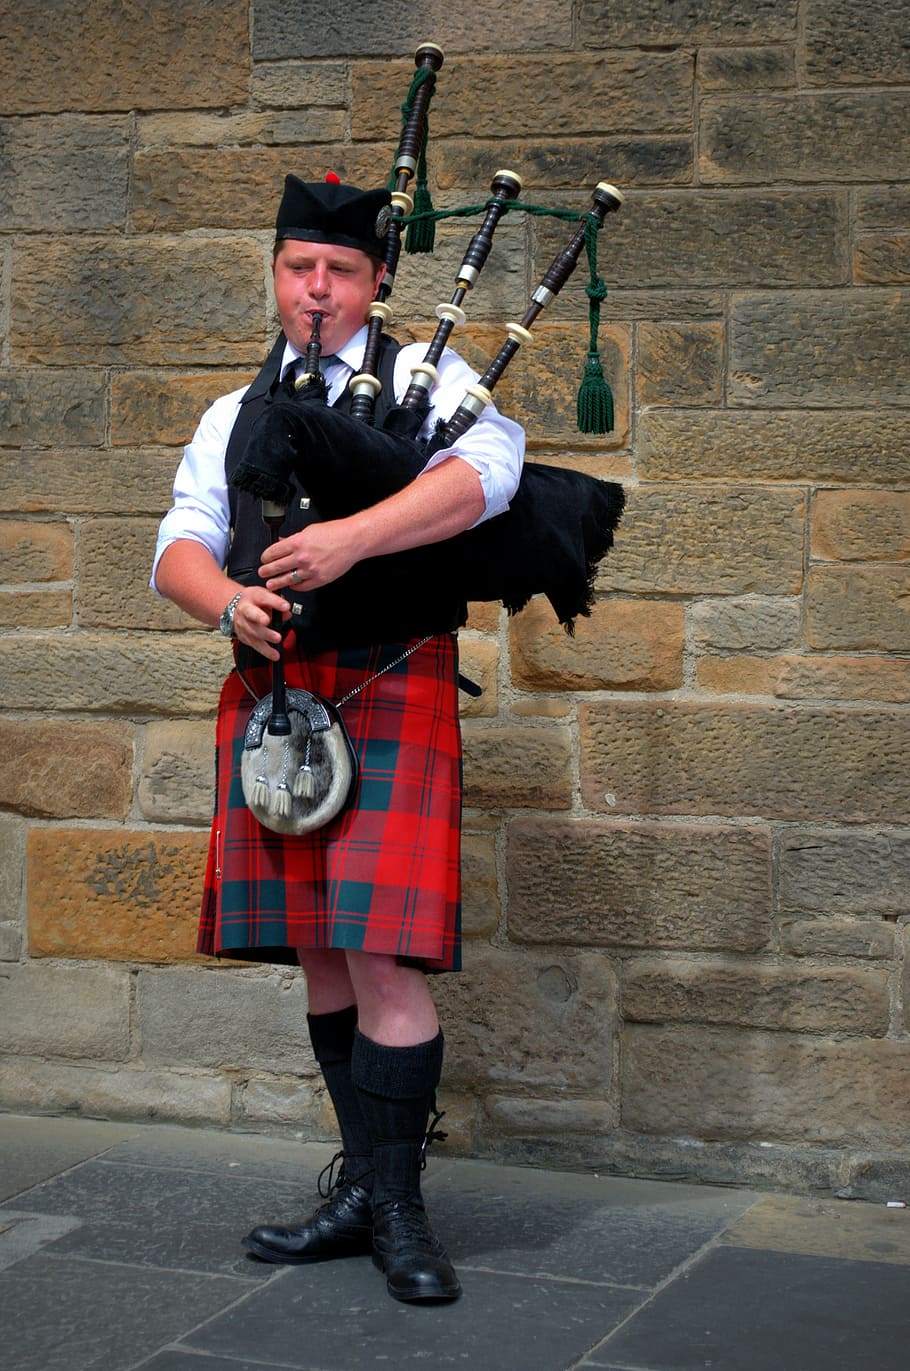 bagpipes, kilt, scotland, jock, human, musical instrument, street musicians, one person, full length, standing